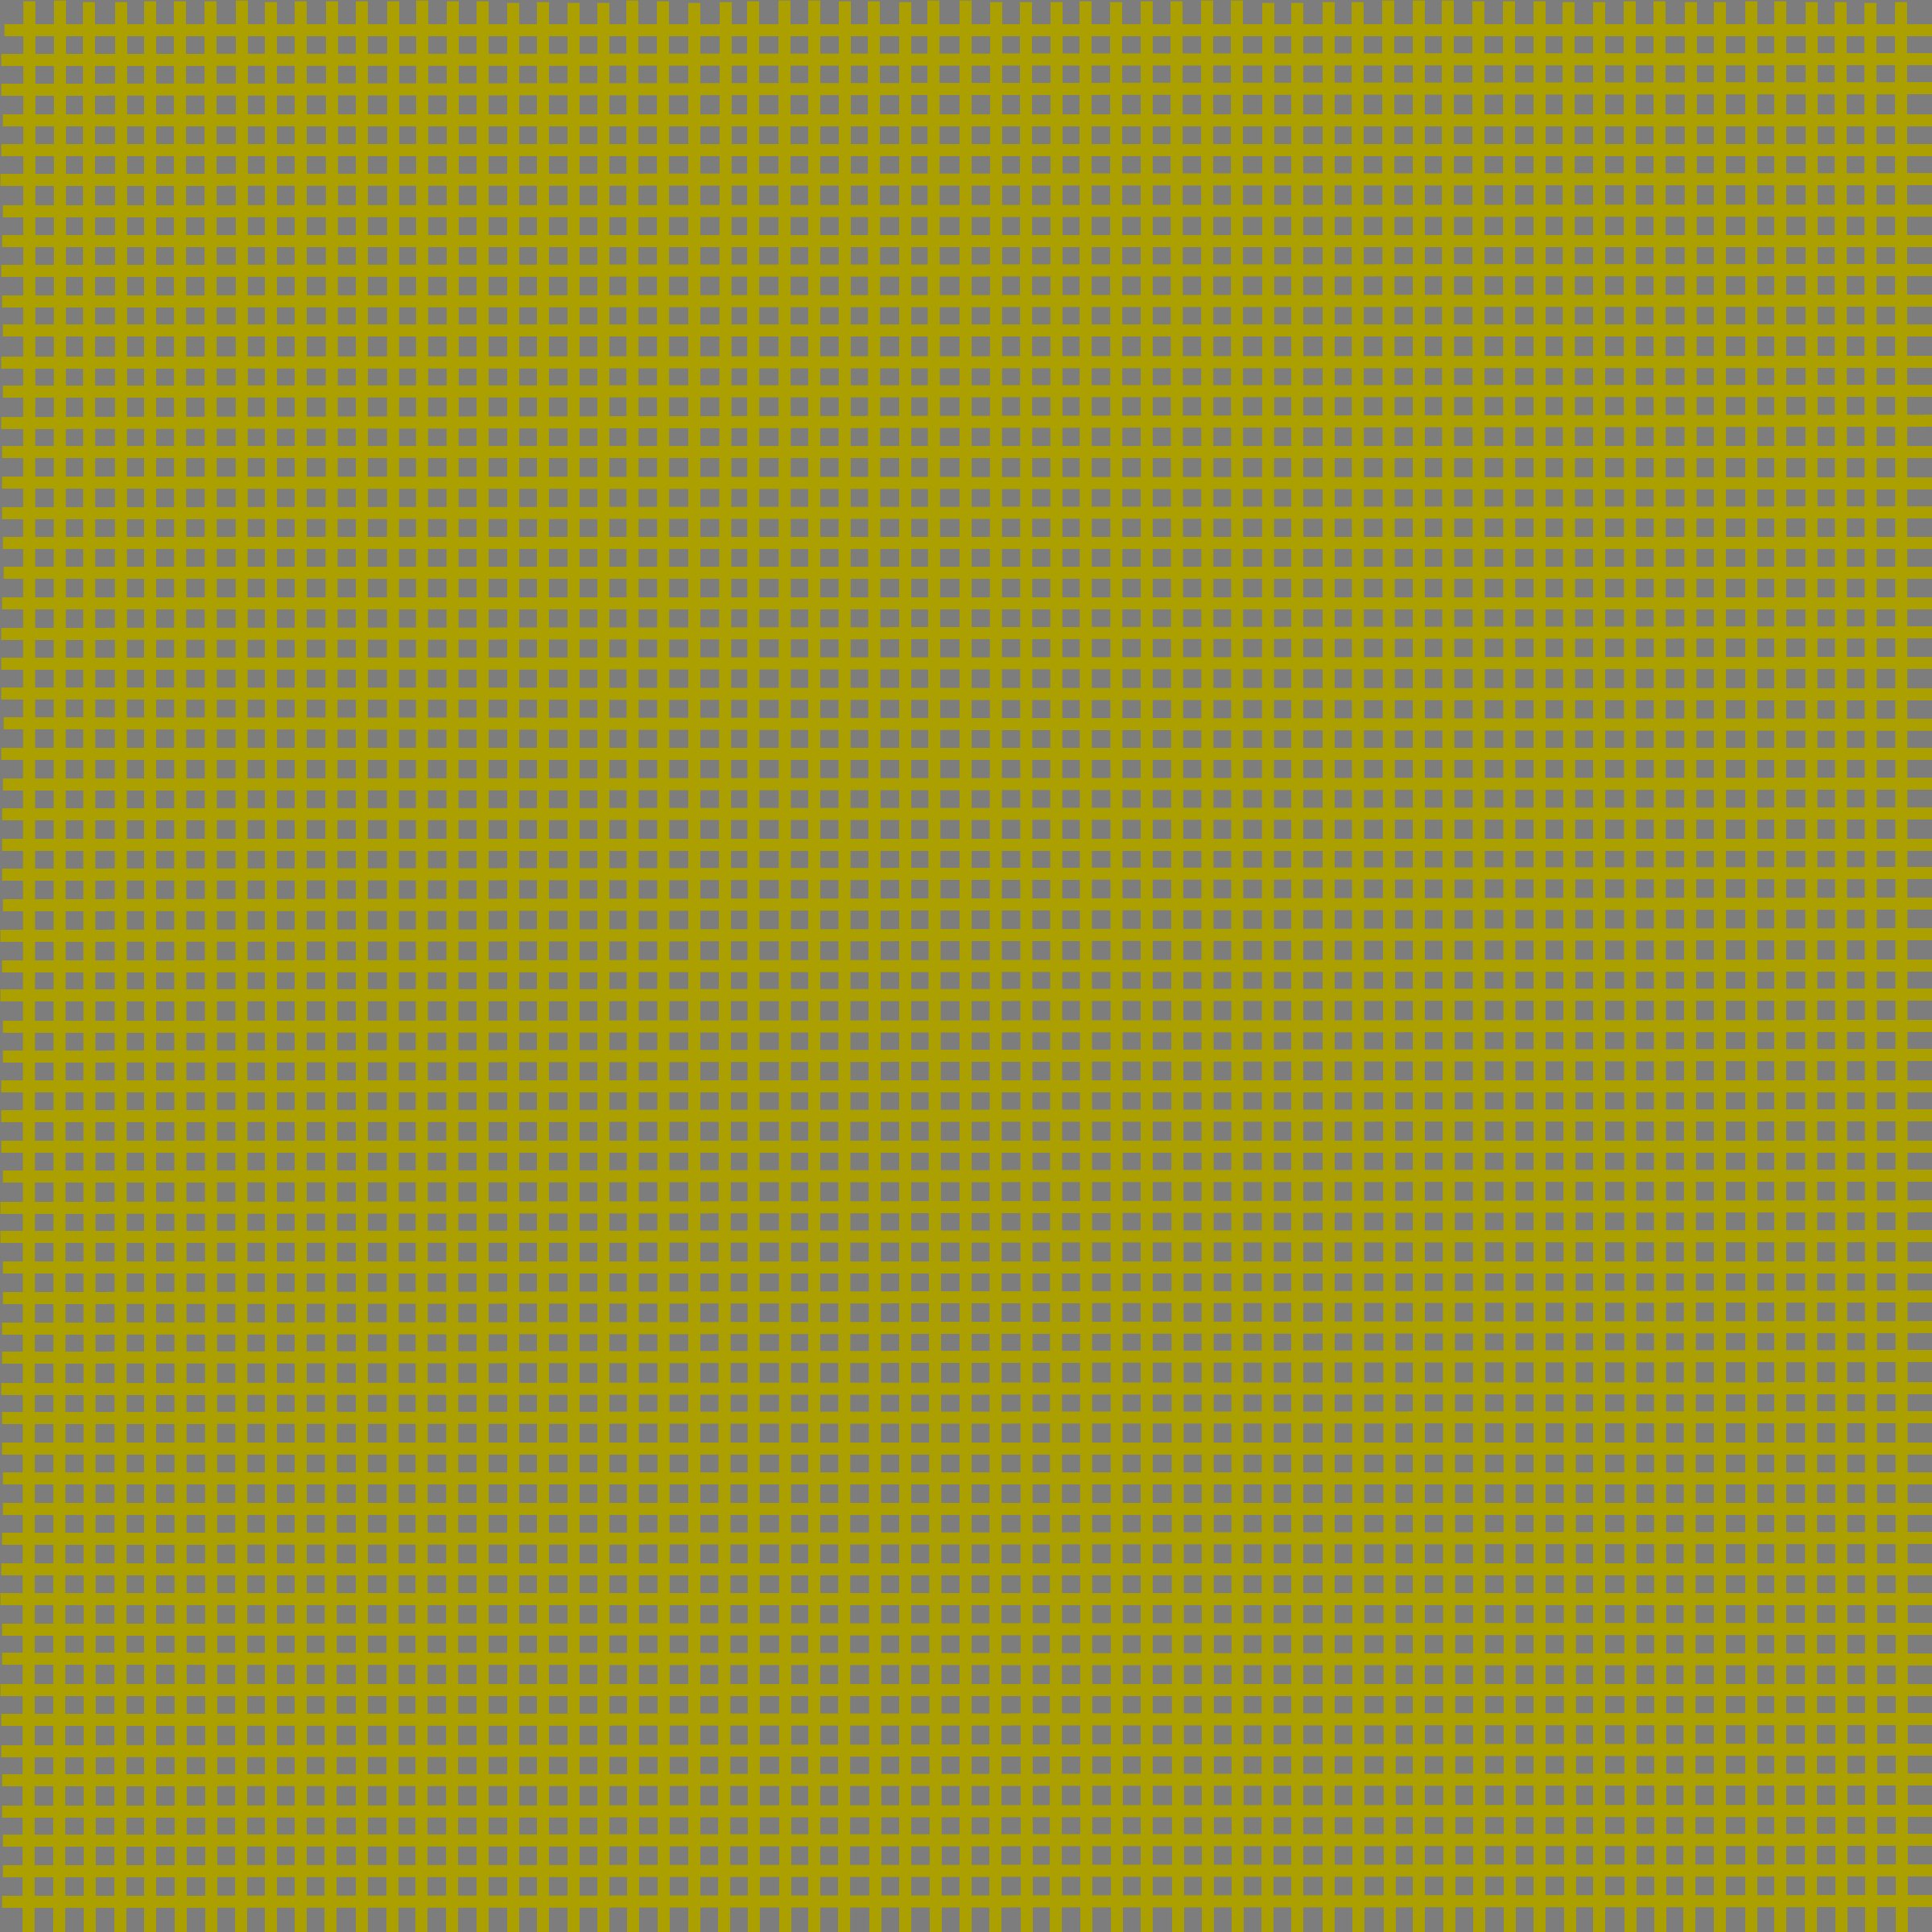 grid 1 (yellow ochre).jpg